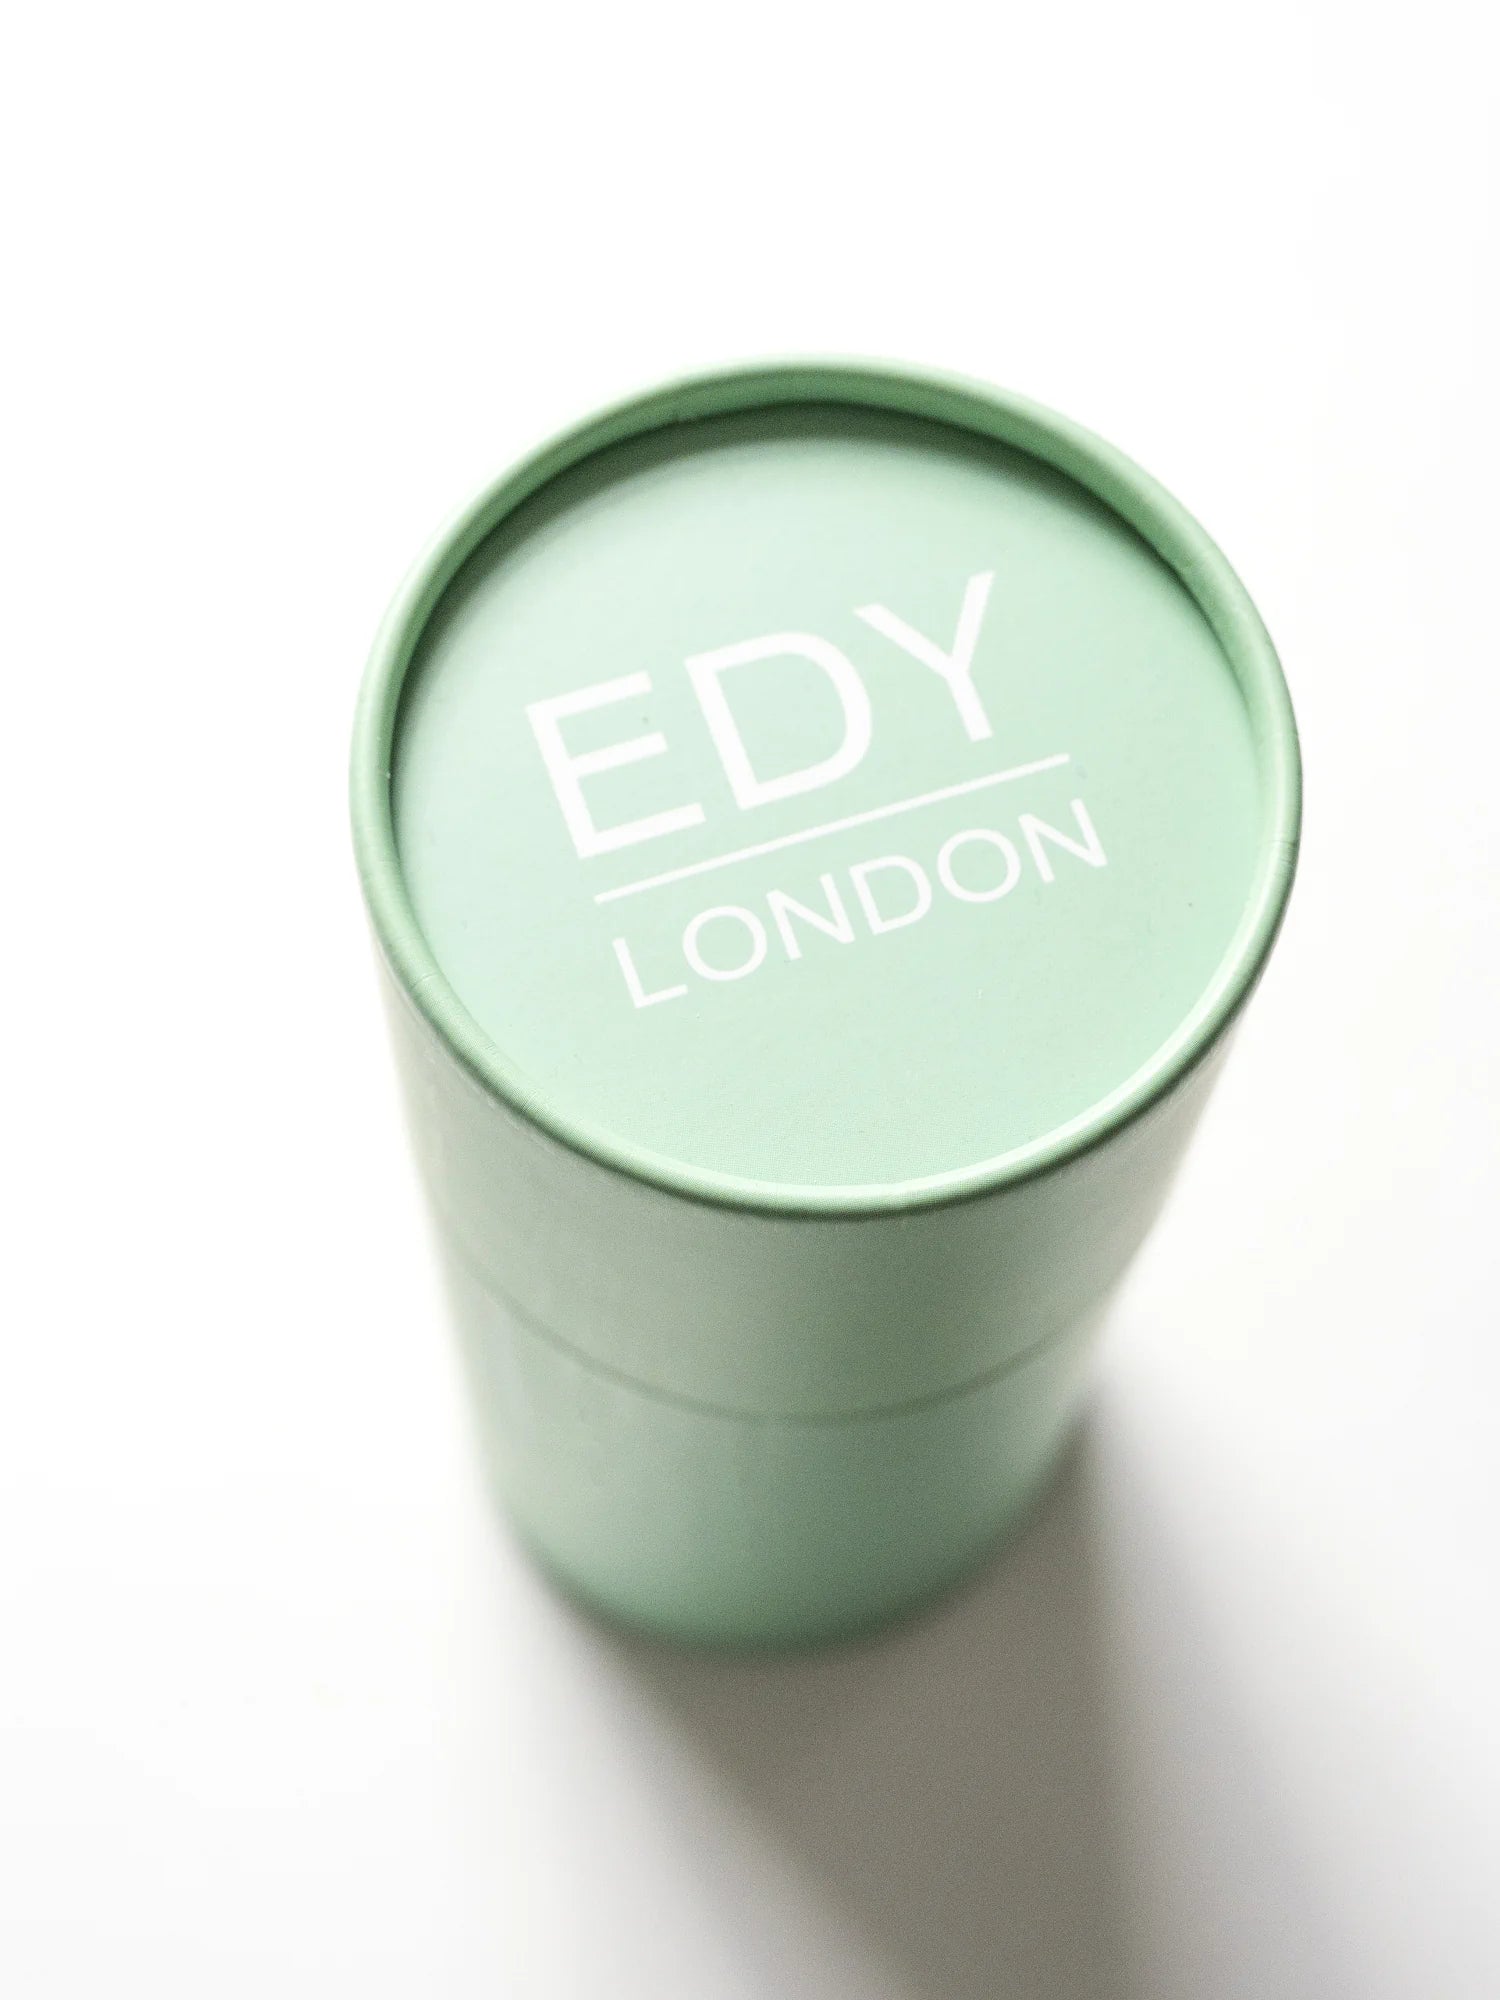 Small Everything Brush Set 501 Make-up Brush EDY LONDON    - EDY LONDON PRODUCTS UK - The Best Makeup Brushes - shop.edy.london